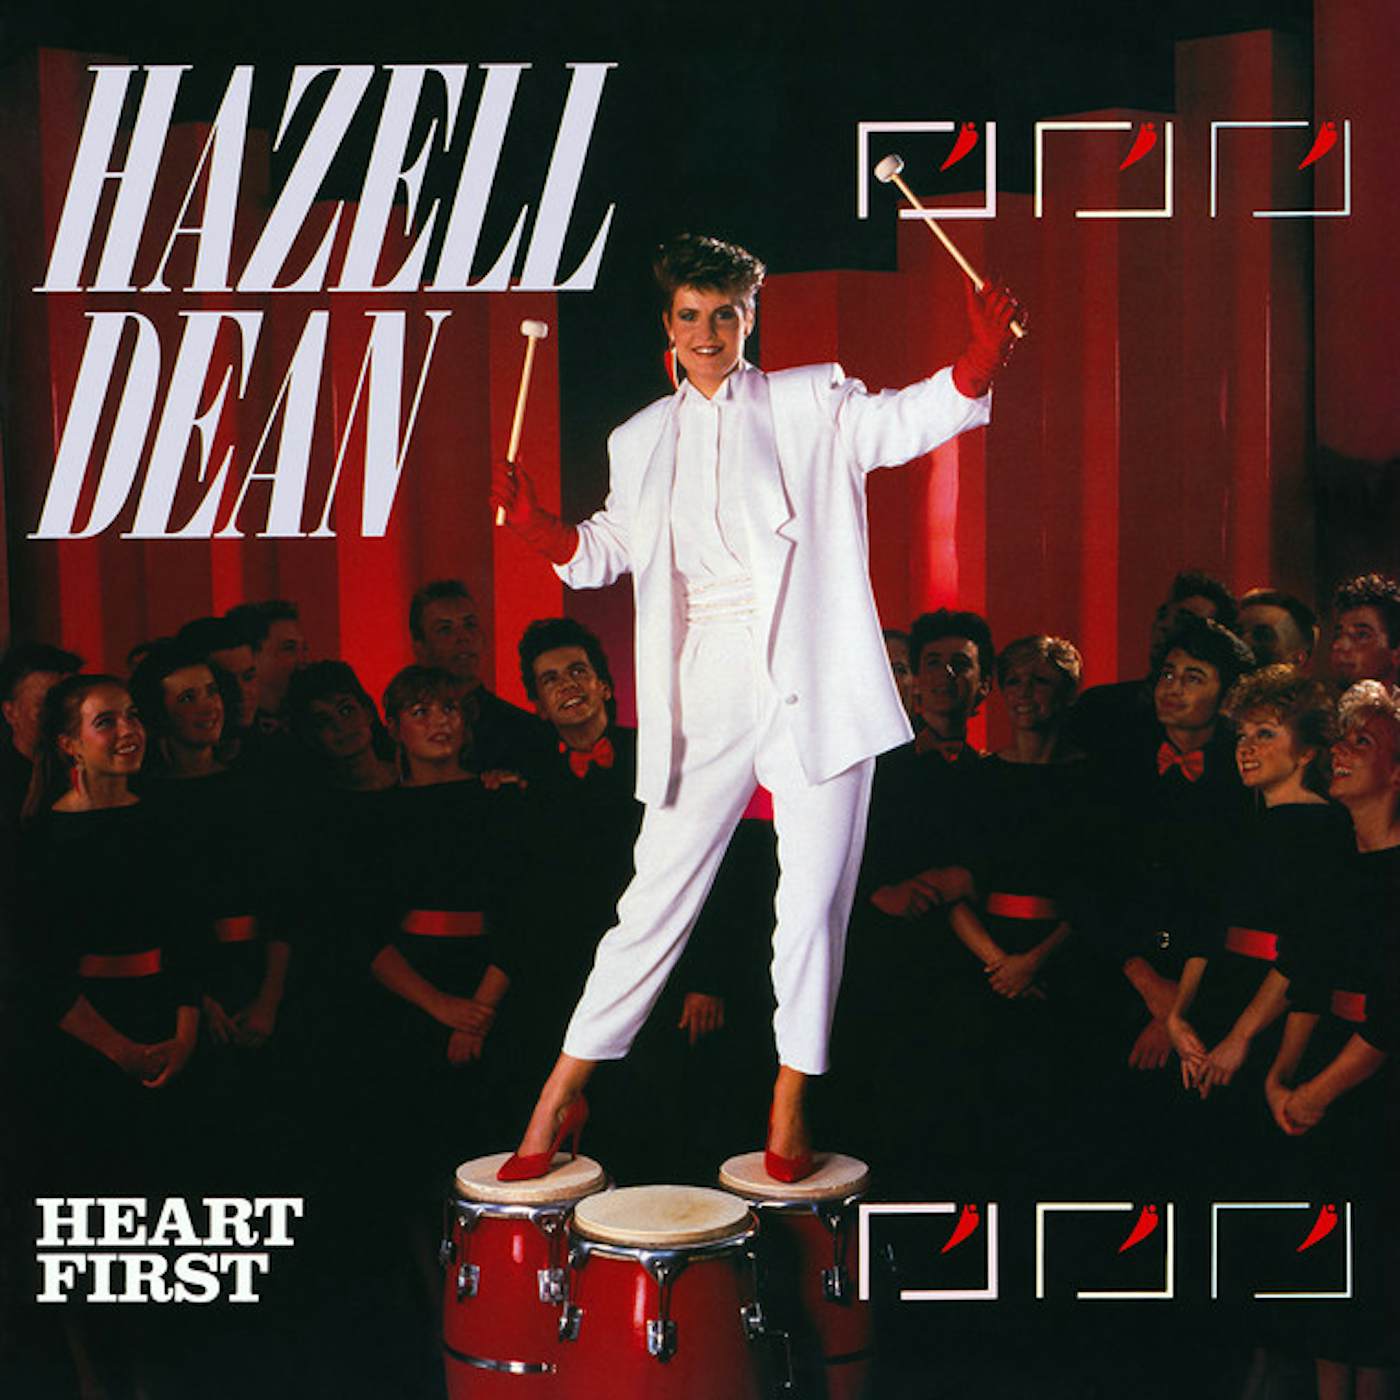 Hazell Dean HEART FIRST: DELUXE EDITION CD